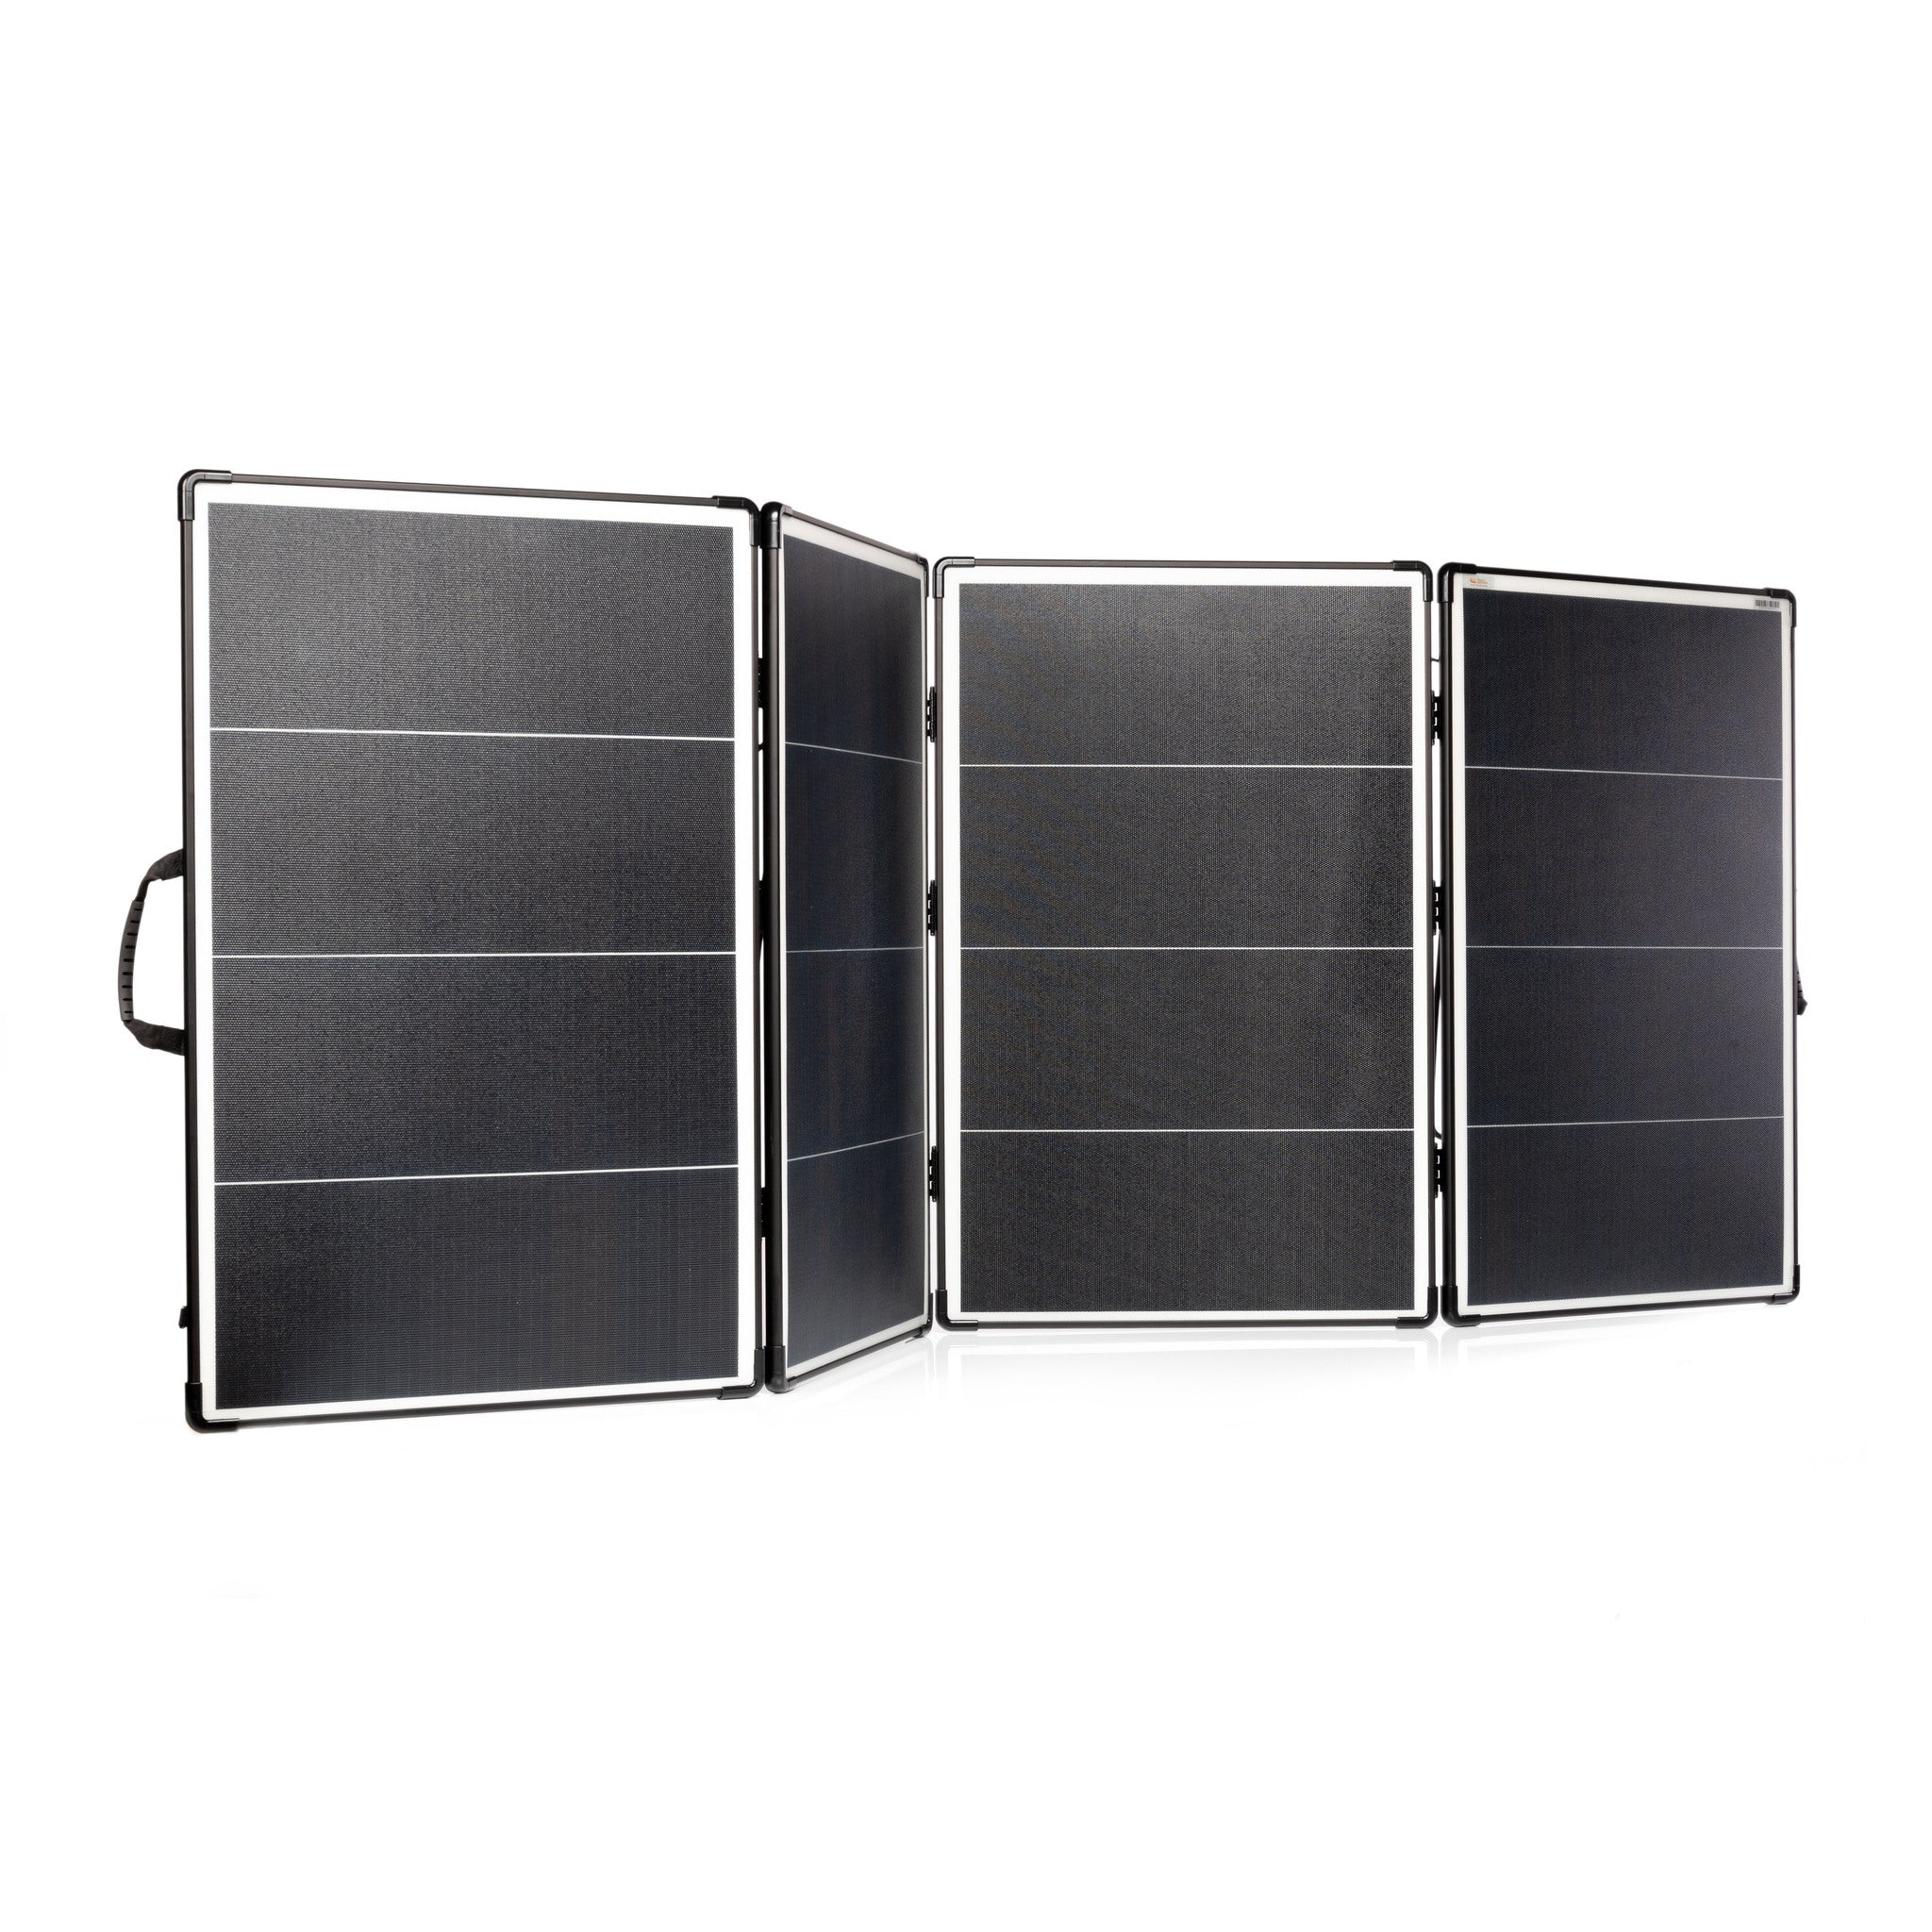 The new Hi Volt Solar Panels from Flexopower: Kalahari 400W and Kalahari 300W